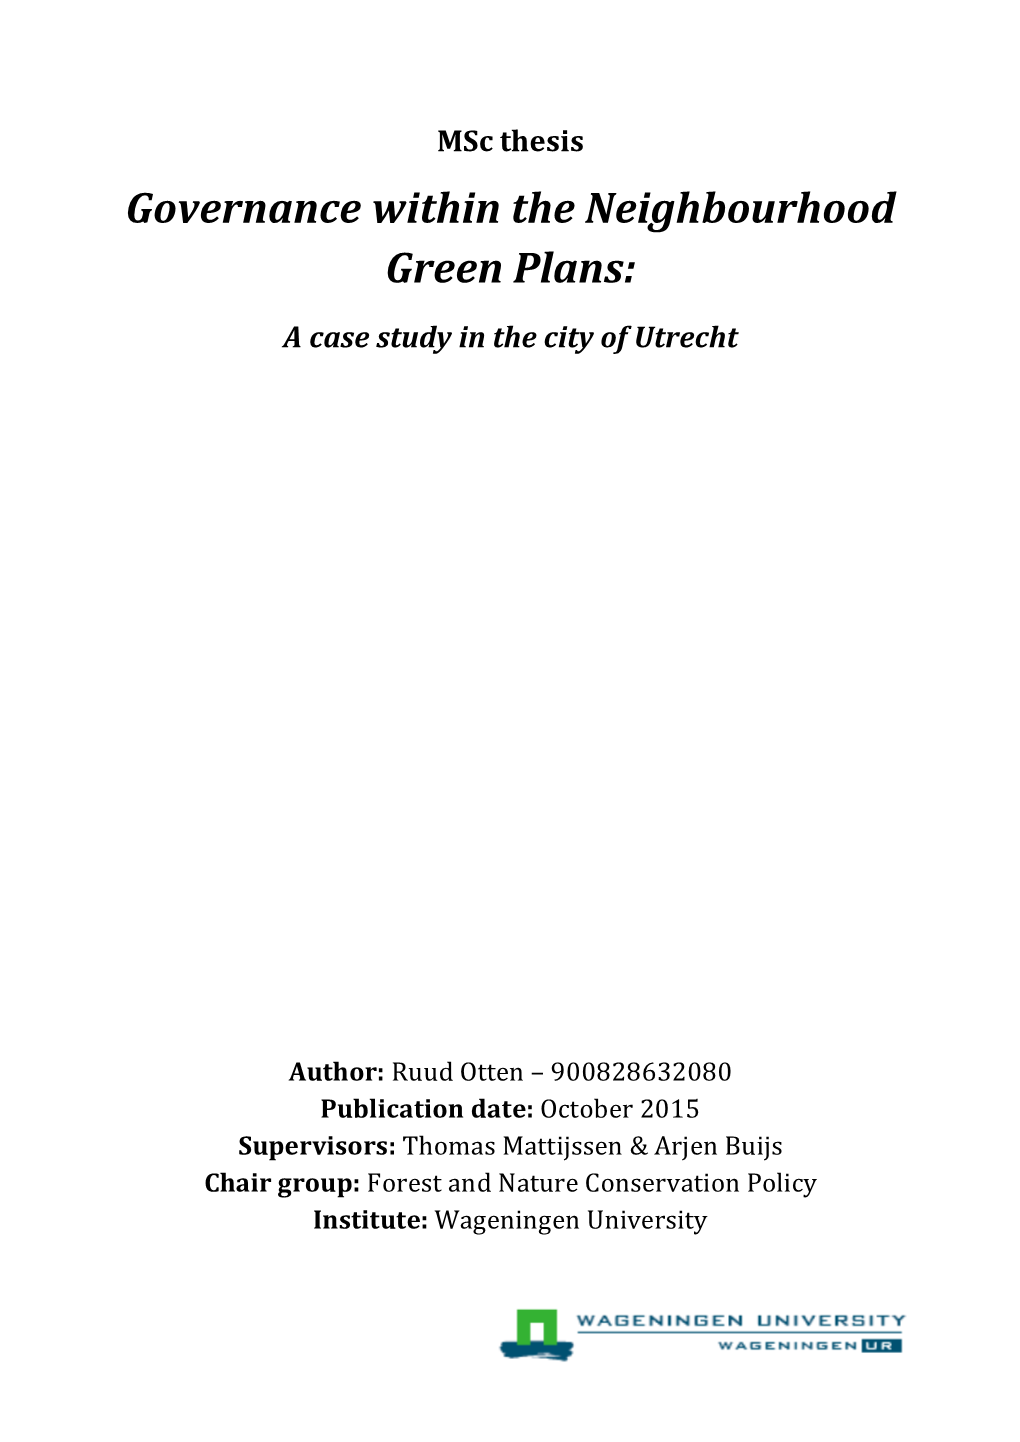 Governance Within the Neighbourhood Green Plans